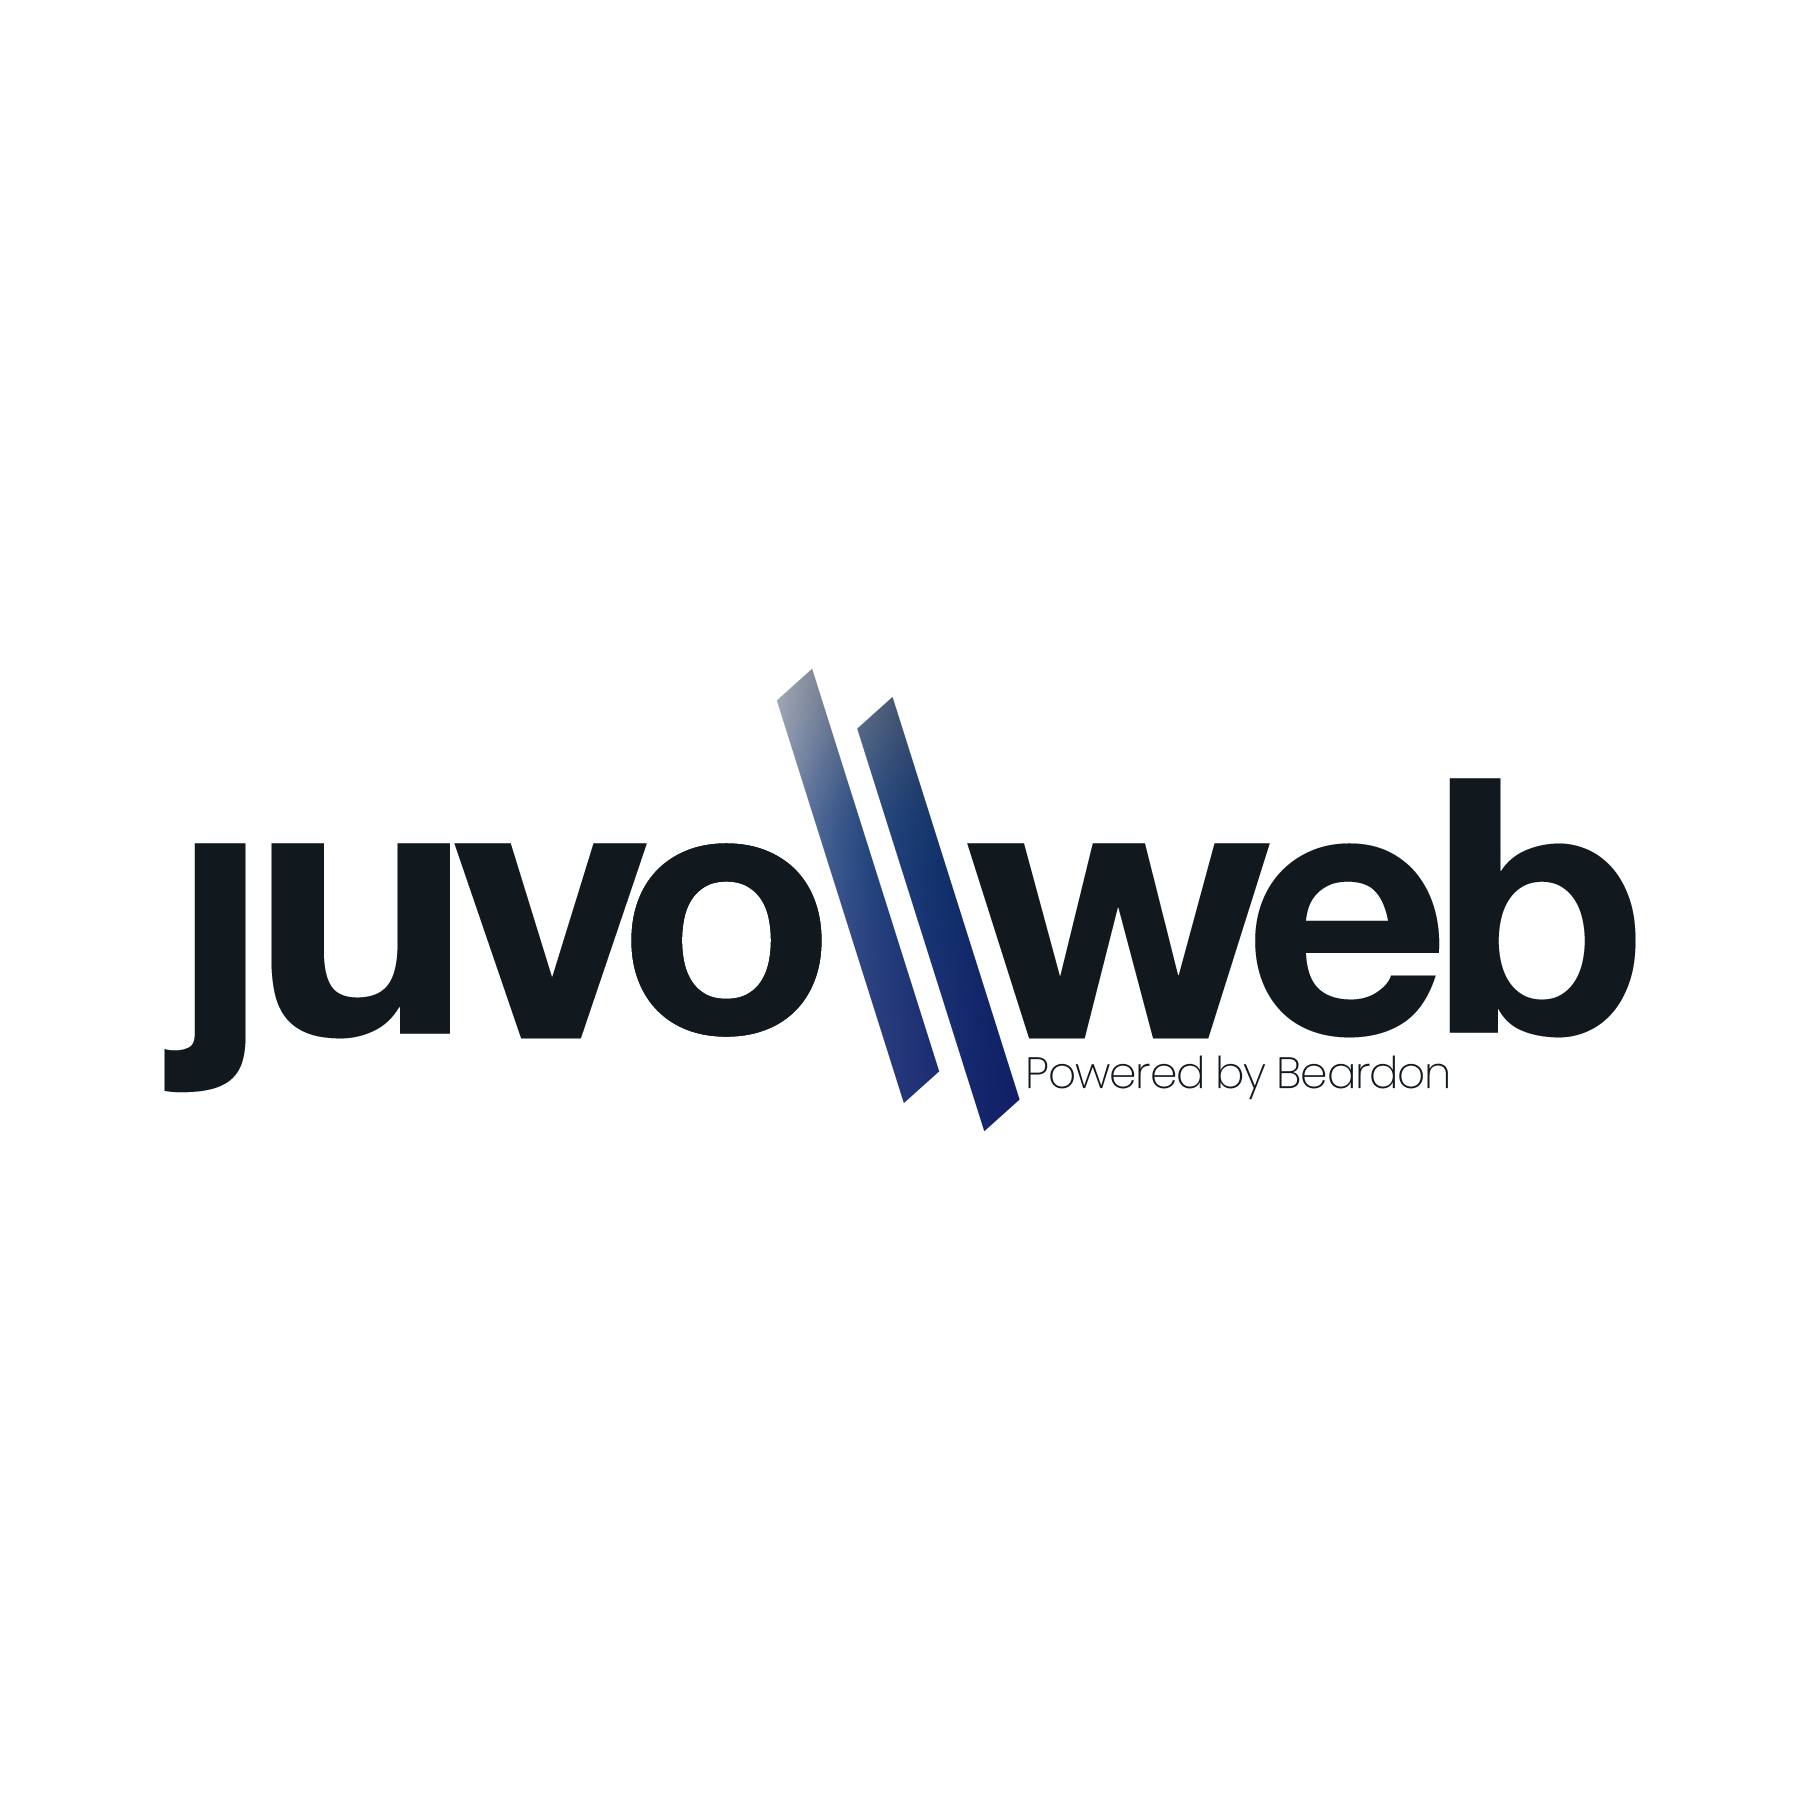 2021_juvoweb_new_logo-01 (1)